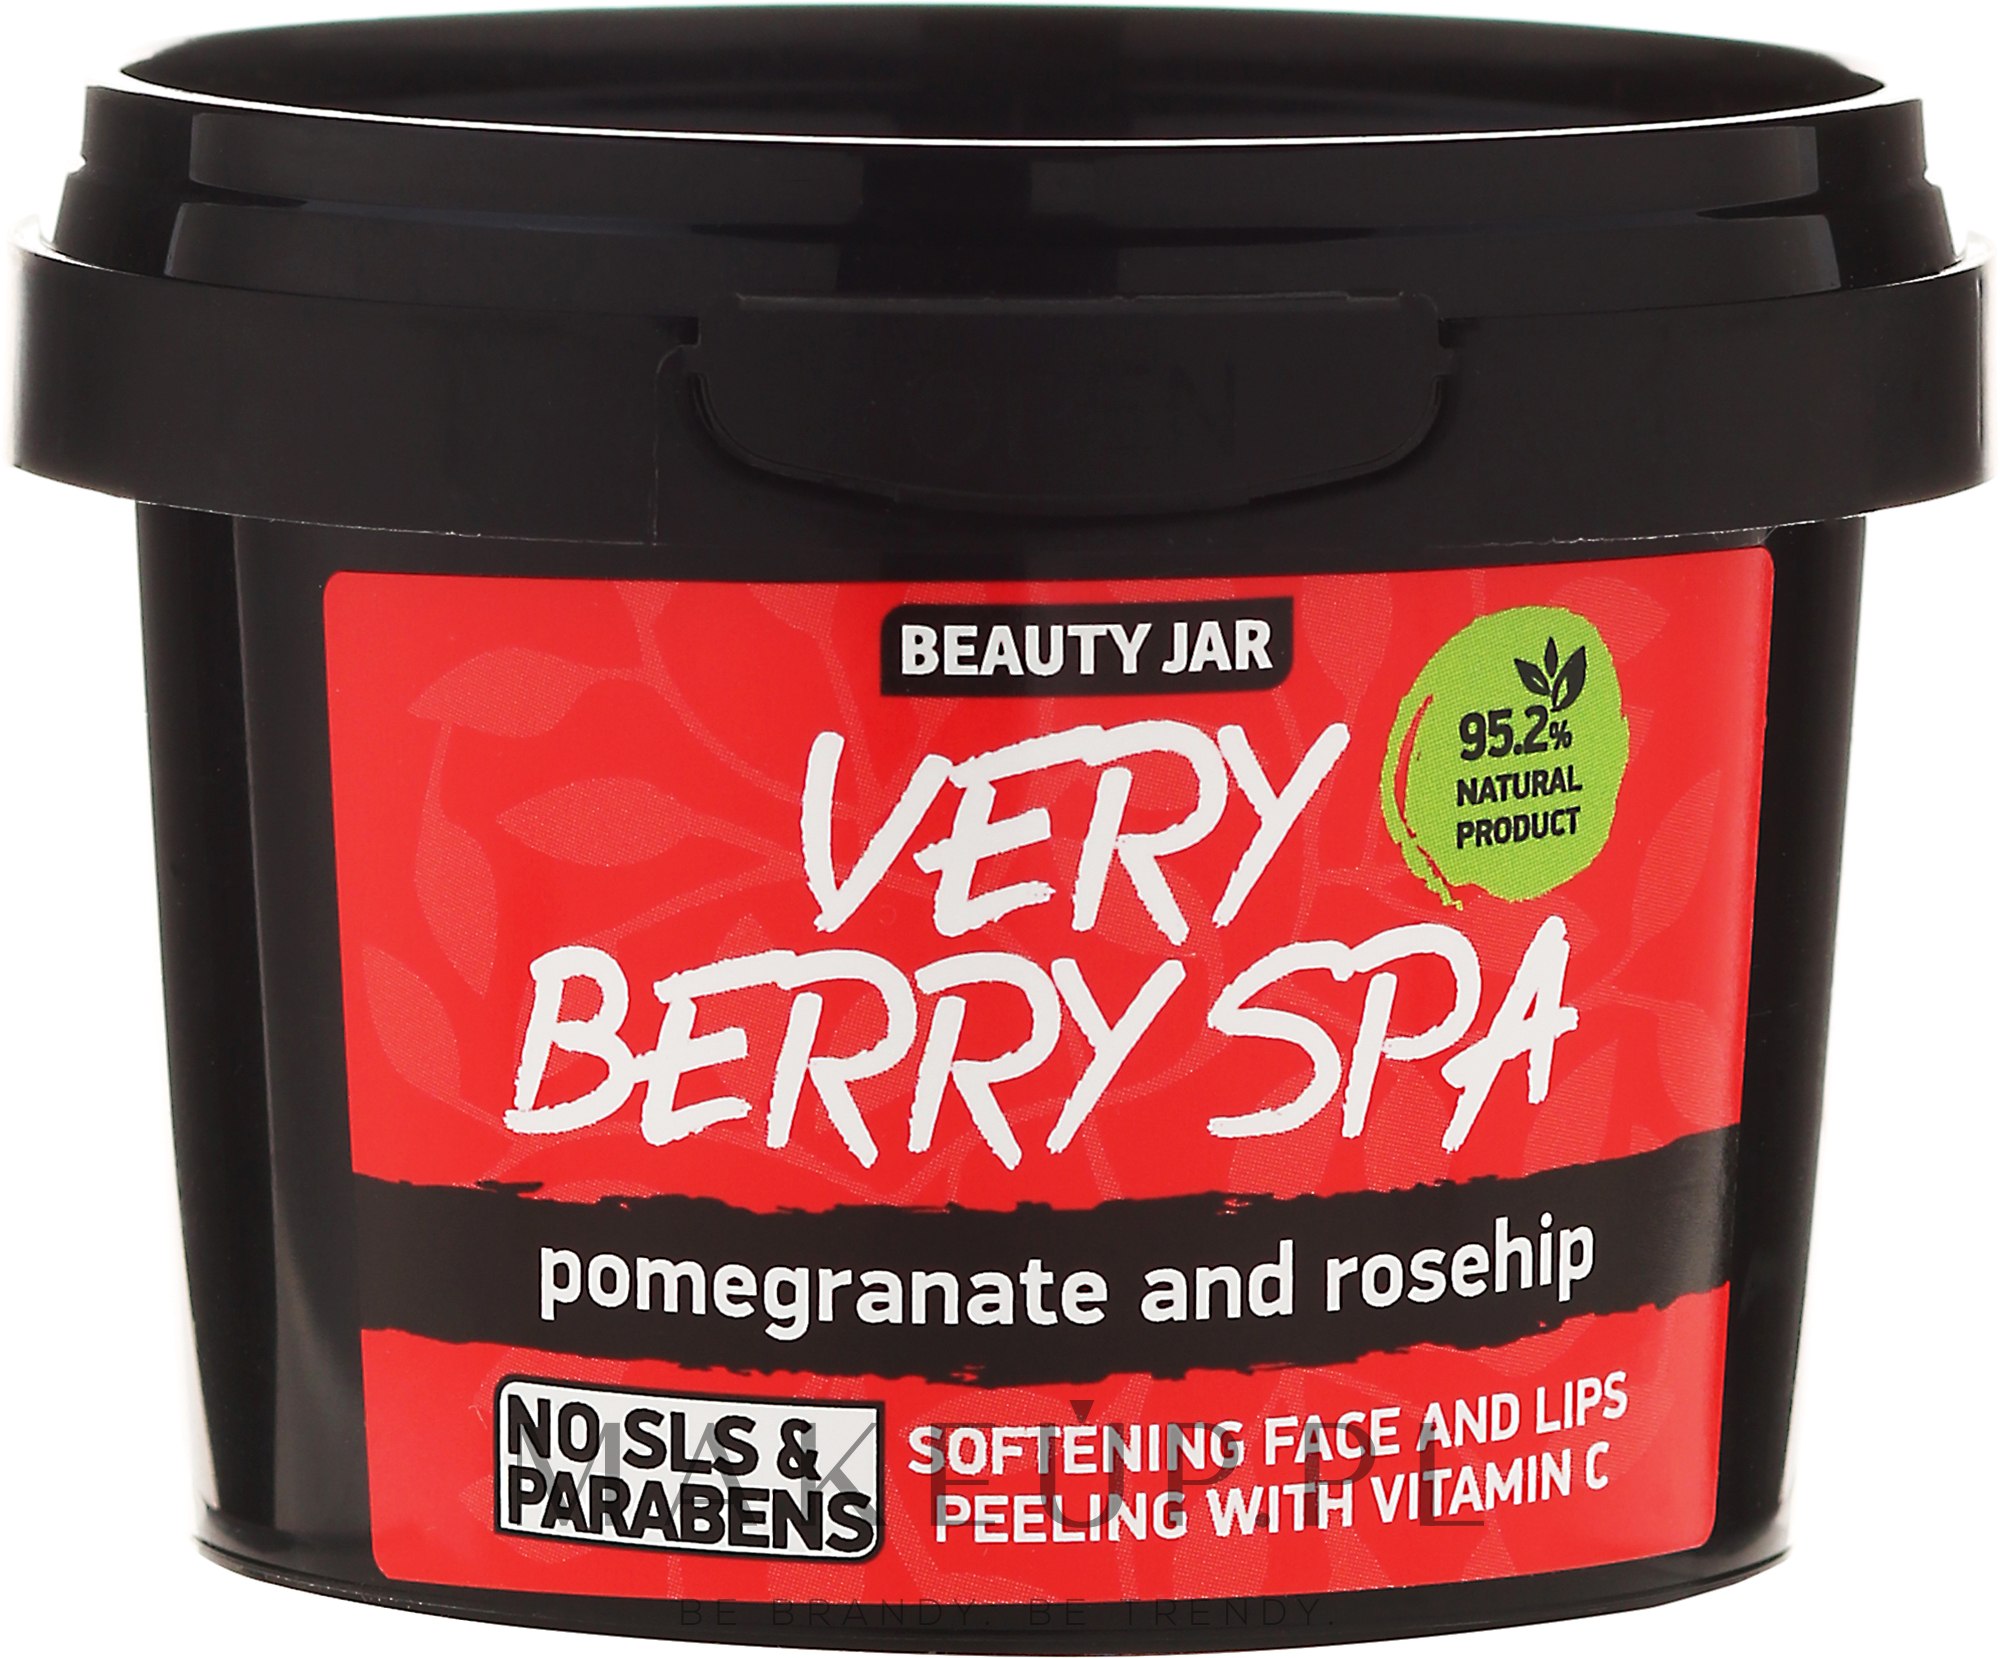 Delikatny peeling do twarzy i ust z witaminą C - Beauty Jar Very Berry Spa Softening Face And Lips Peeling With Vitamin C Pomegranate And Rosehip — Zdjęcie 120 g